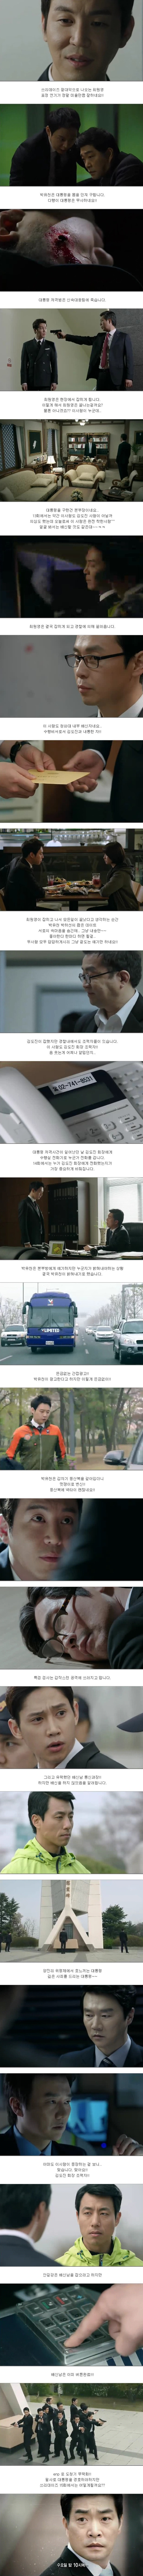 episode 14 captures for the Korean drama 'Three Days'